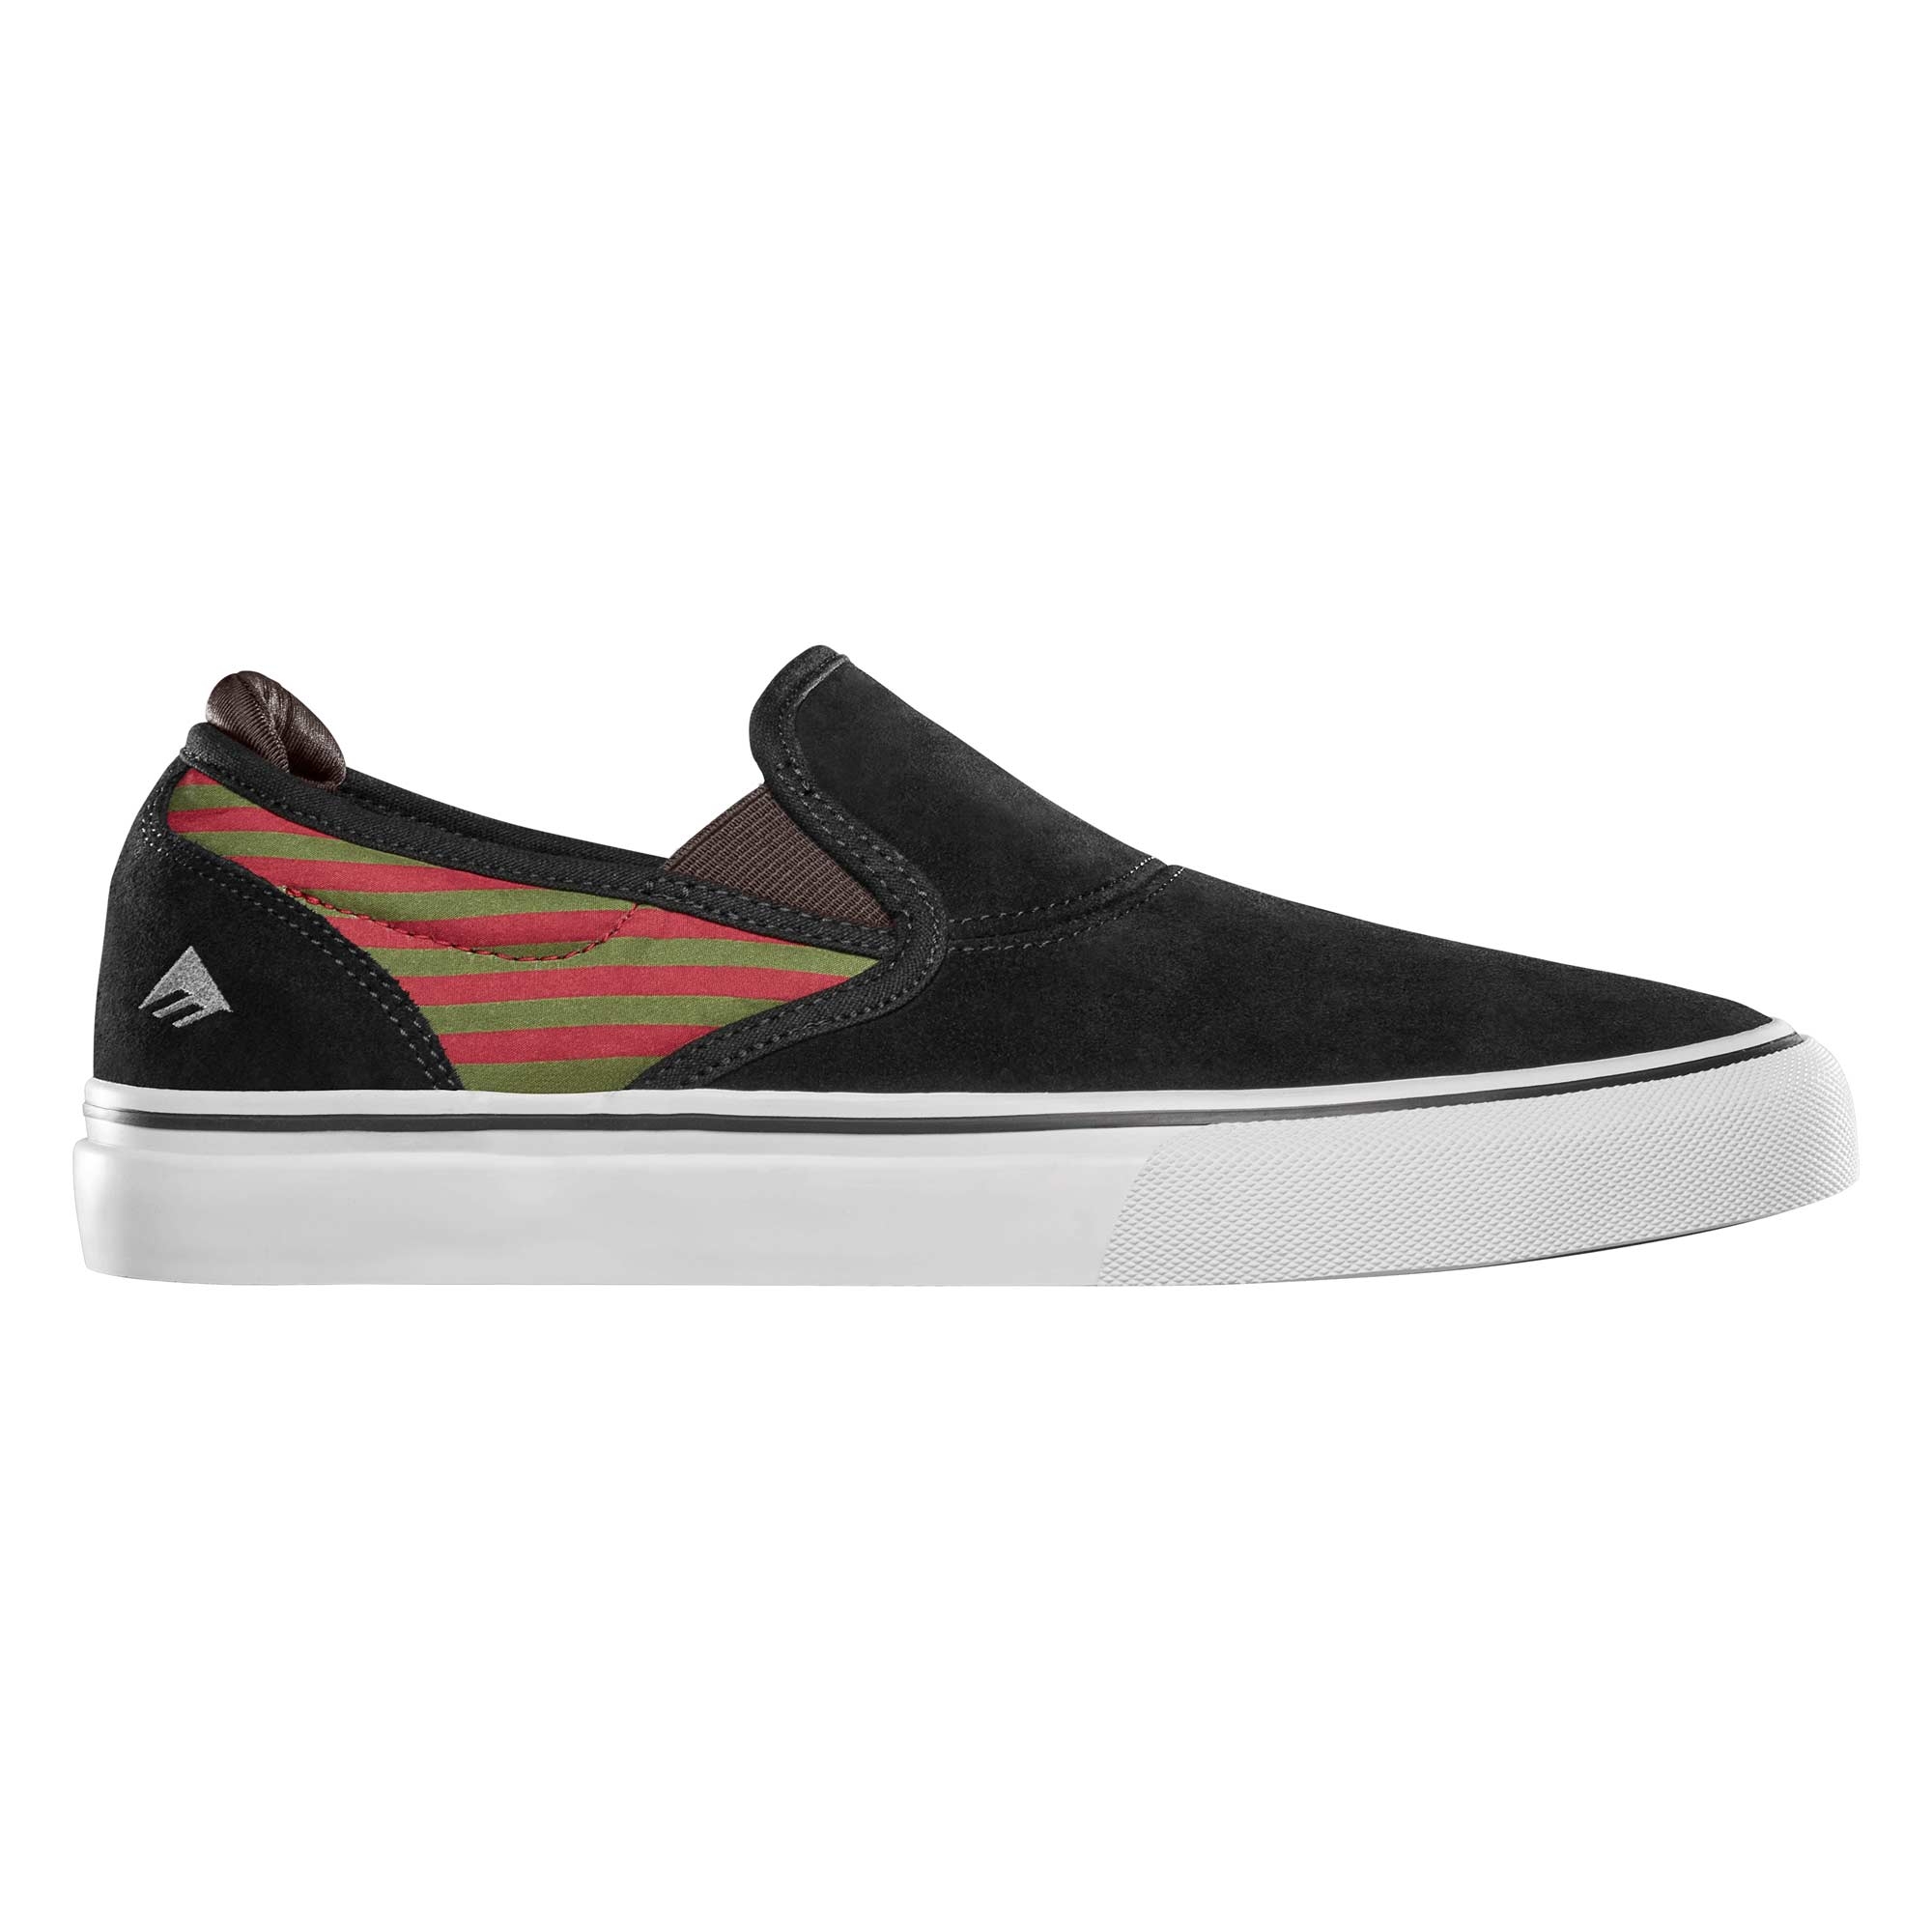 EMERICA Shoe WINO G6 SLIP-ON bla/oli/red balck/olive/red